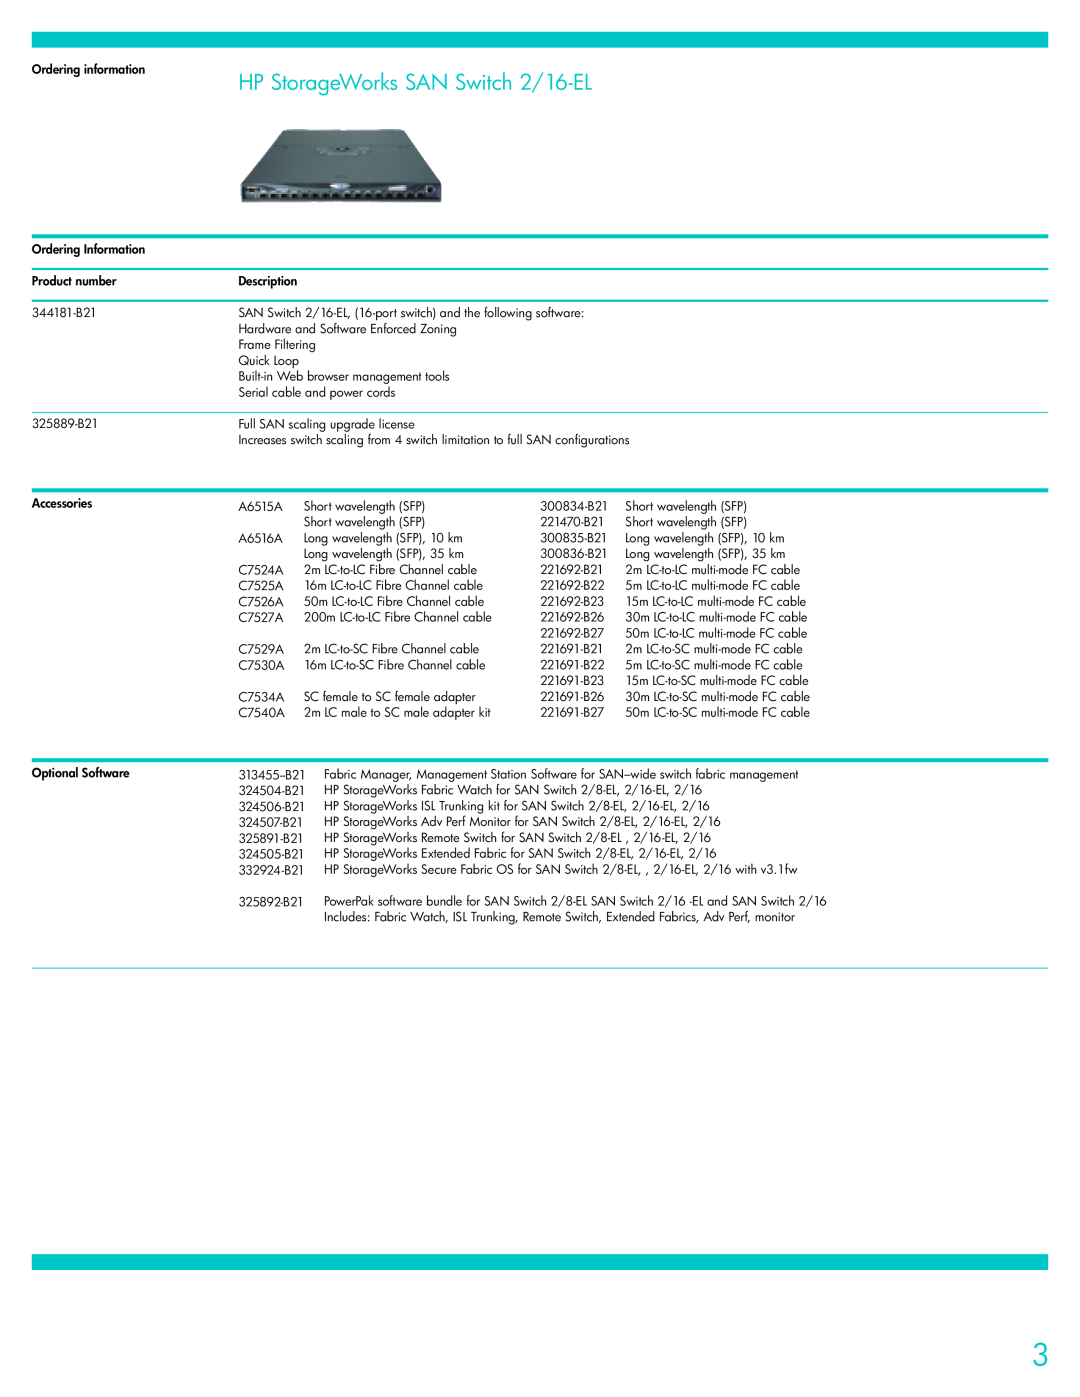 Compaq manual HP StorageWorks SAN Switch 2/16-EL, Ordering information 